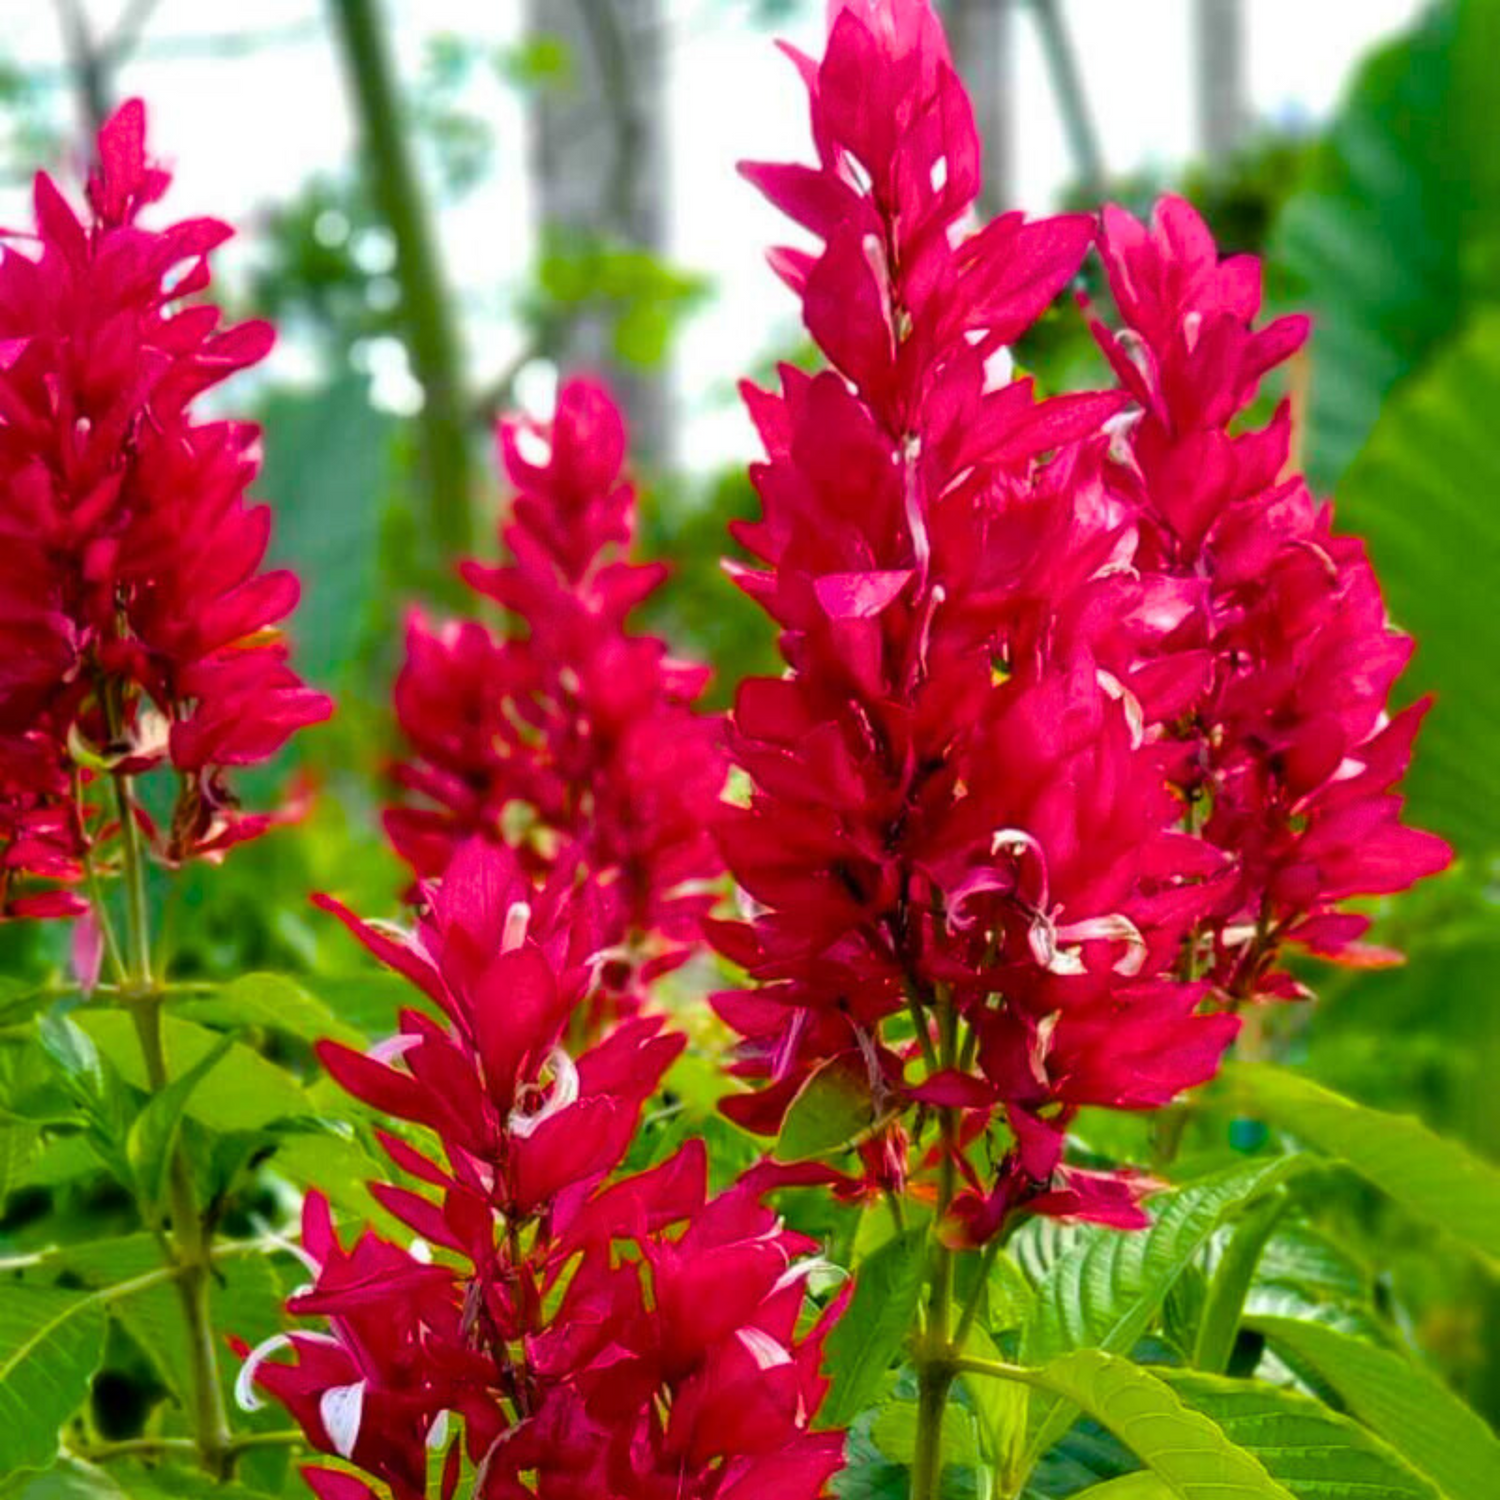 Brazilian Red-Cloak (Megaskepasma erythrochlamys) Rare Flowering Live Plant